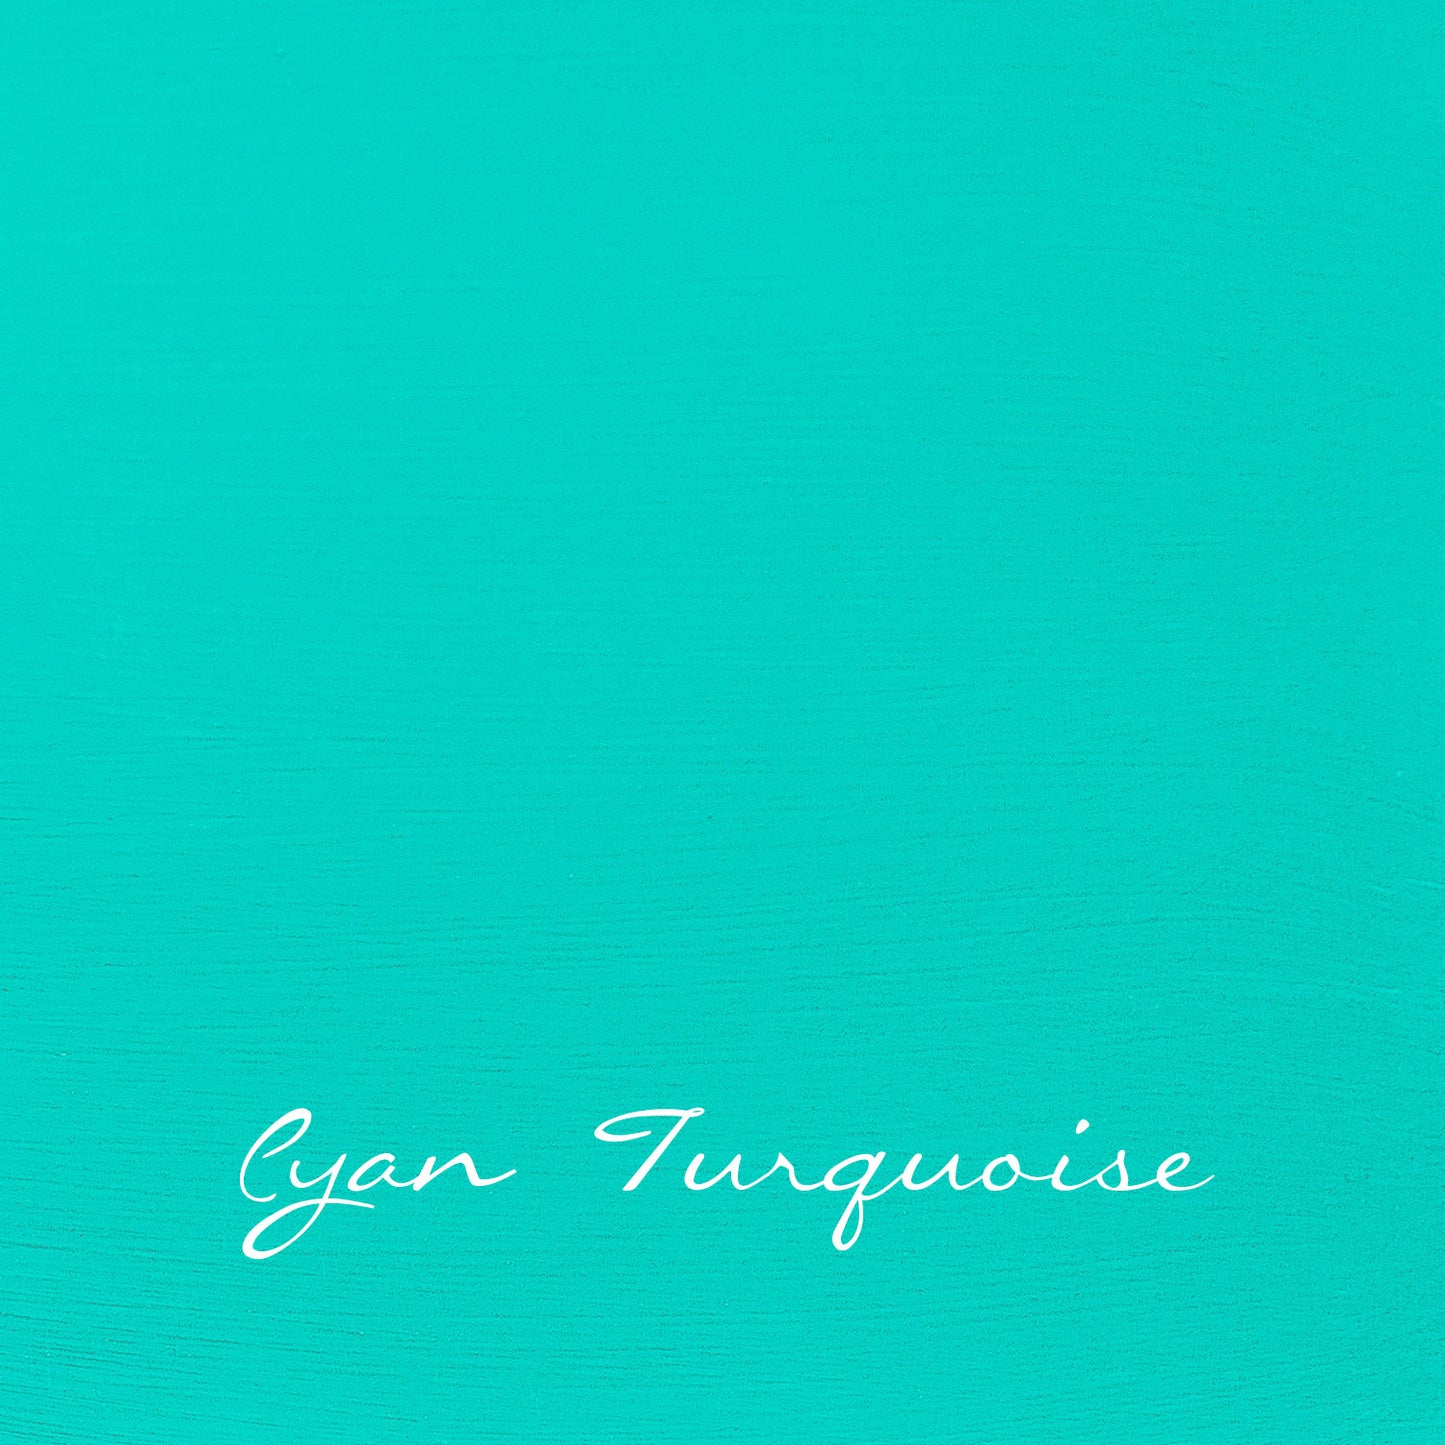 Cyan Turquoise- Vintage